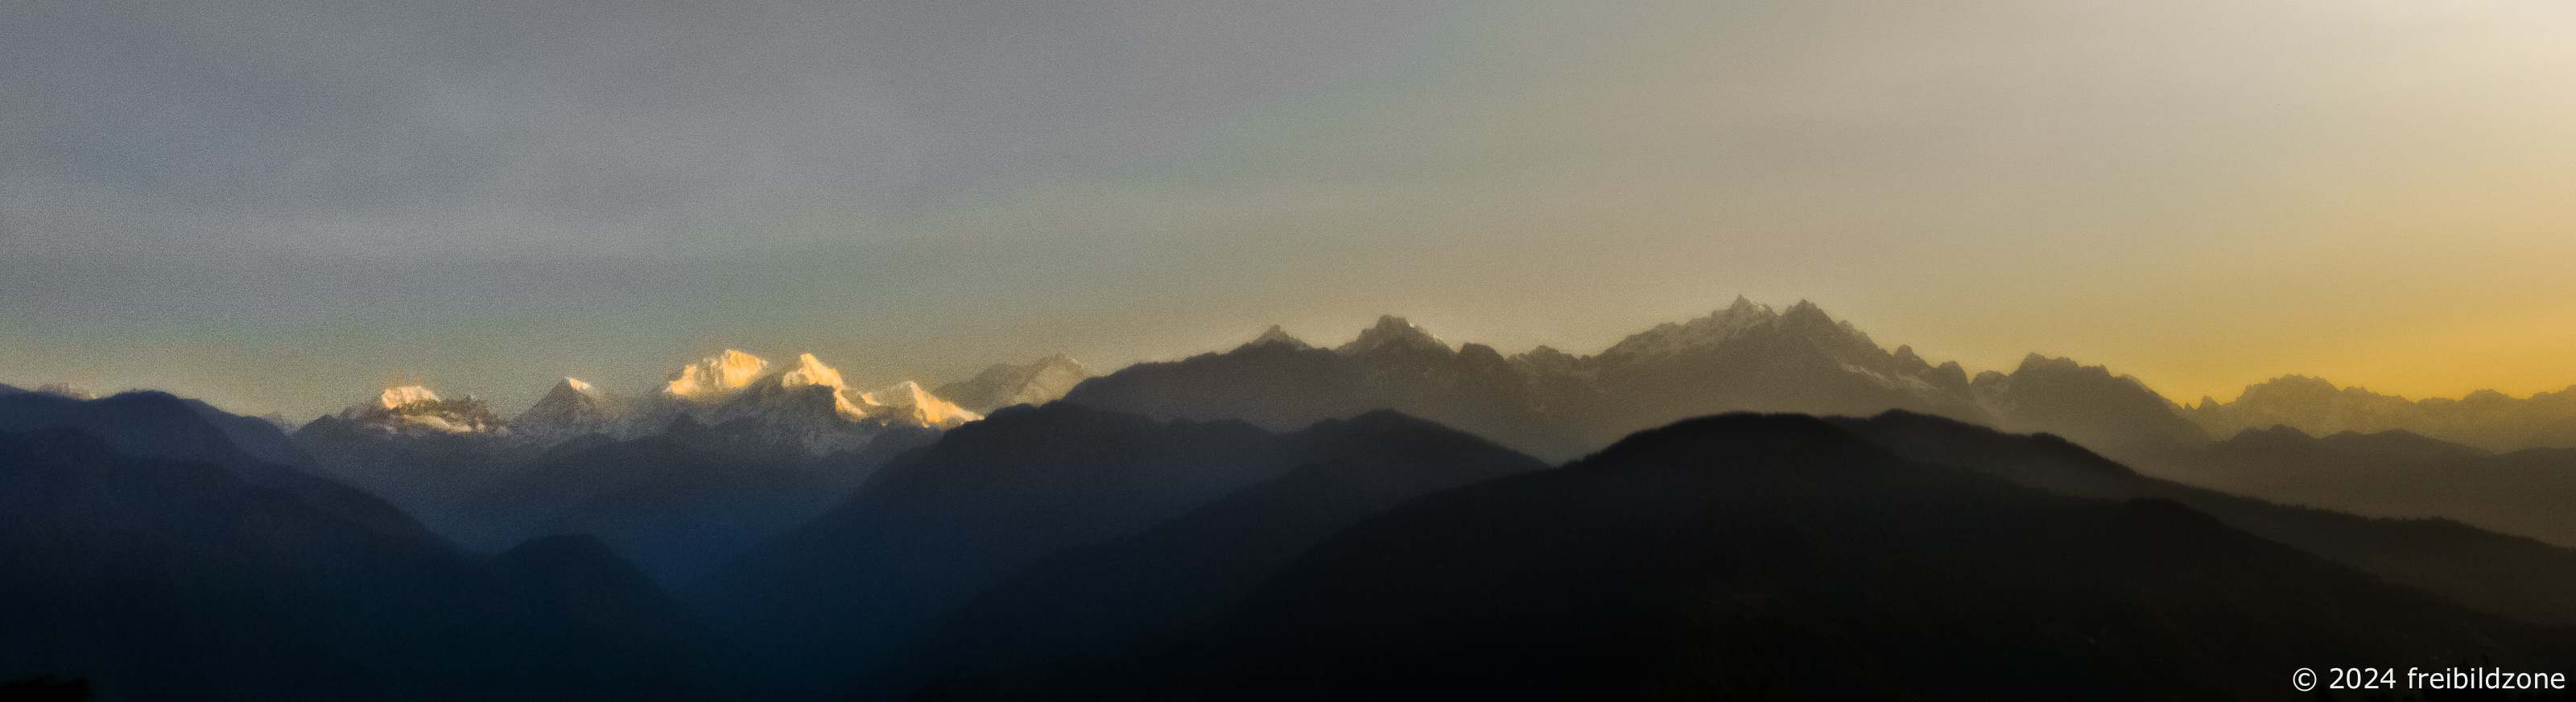 Himalaya peaks